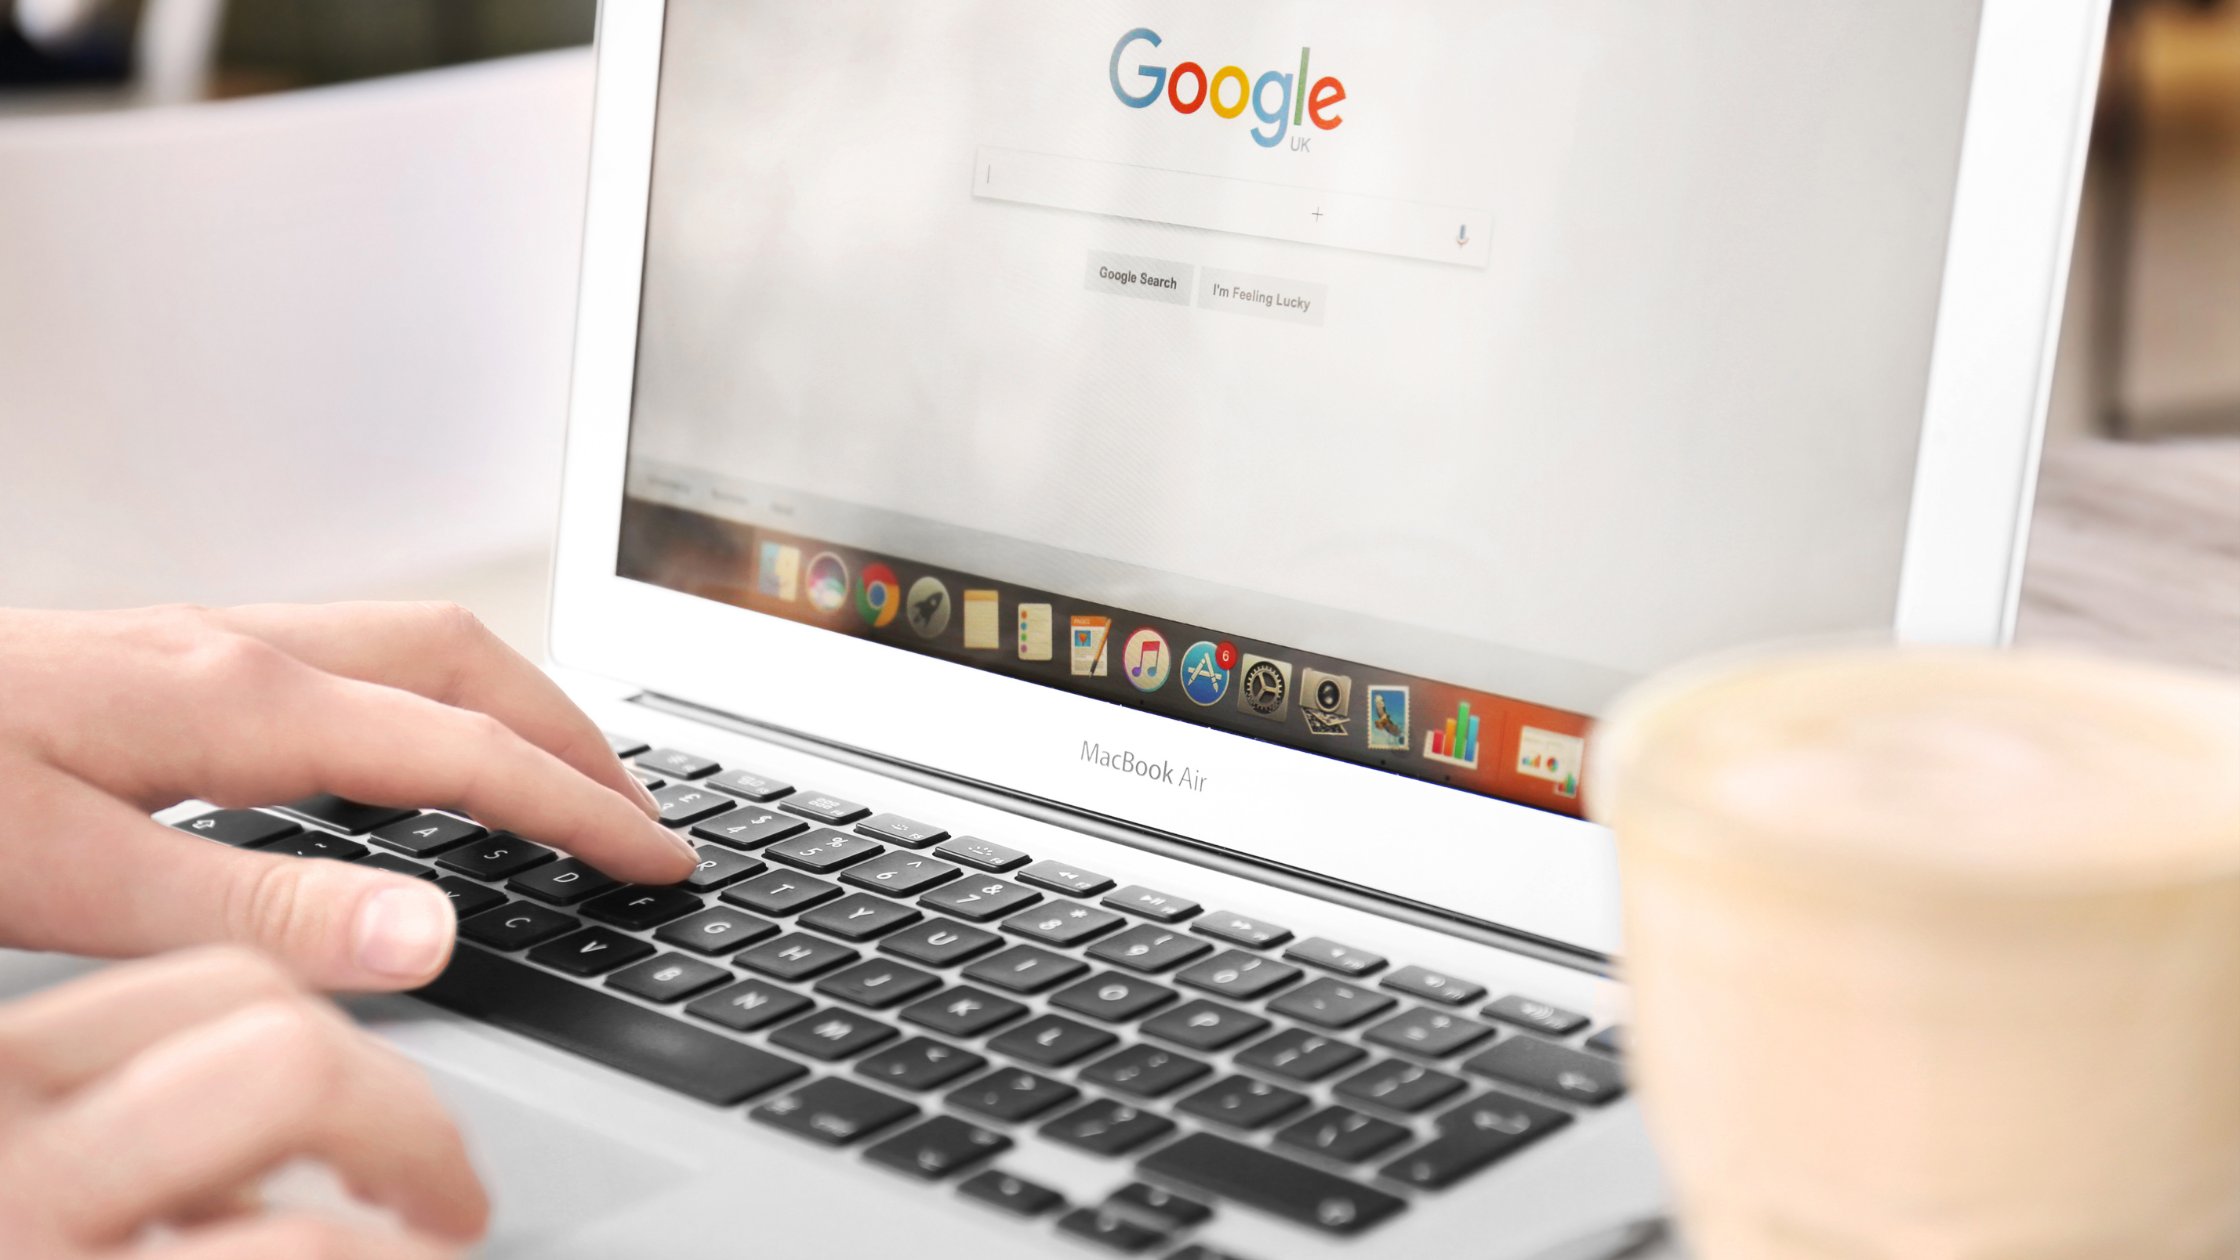 Google search on laptop